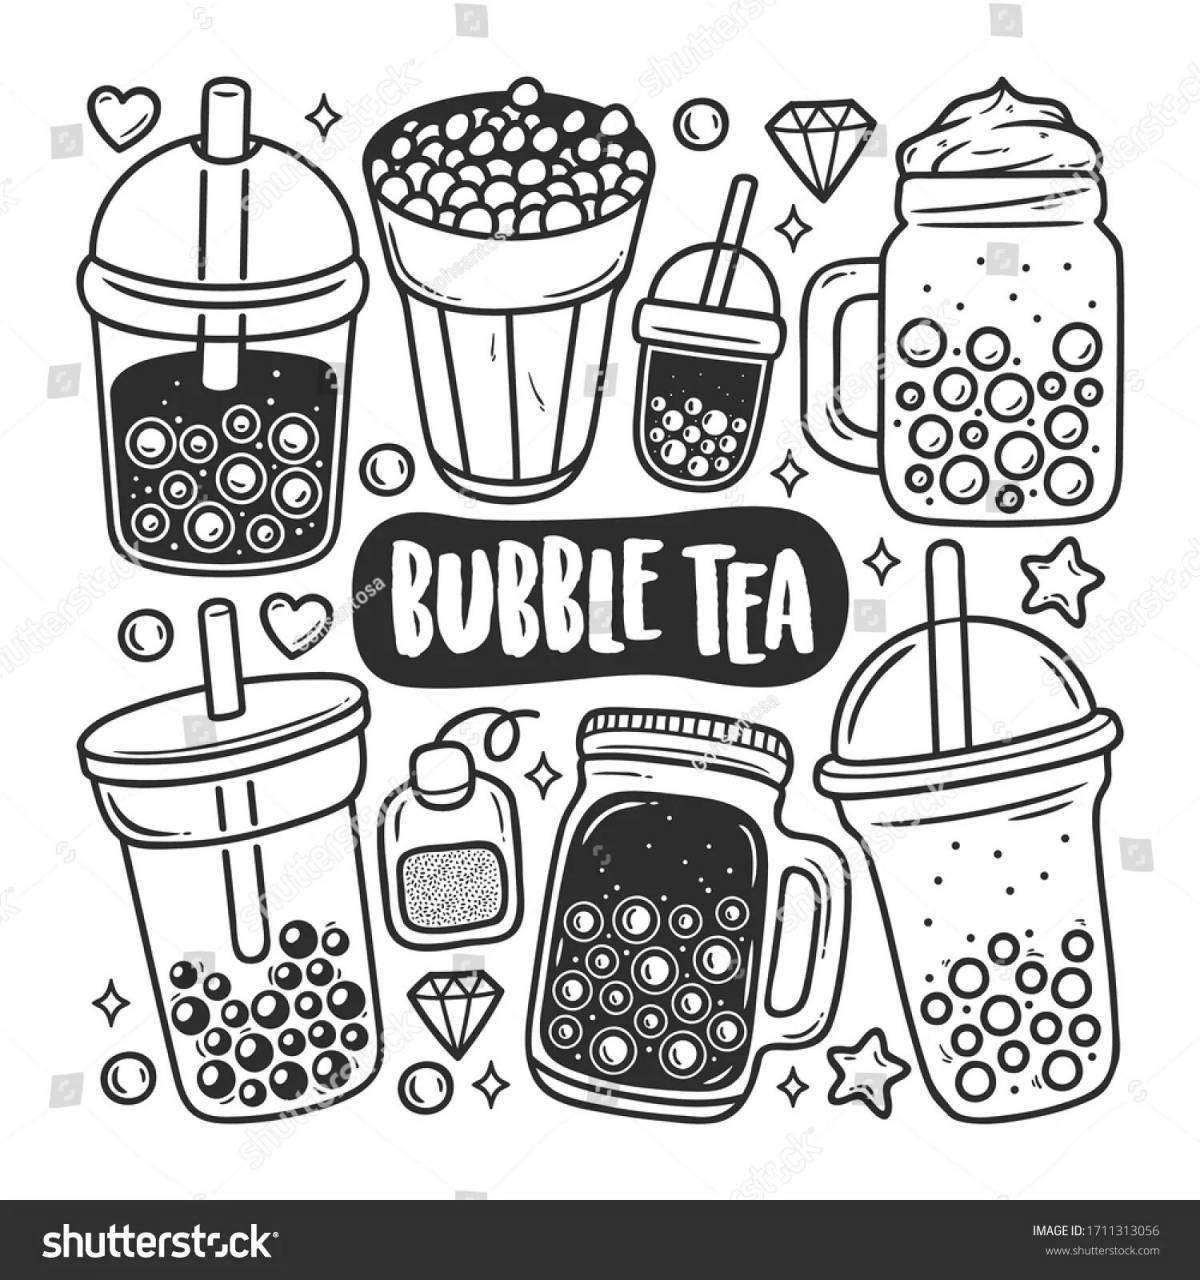 Joyful bubble coloring page